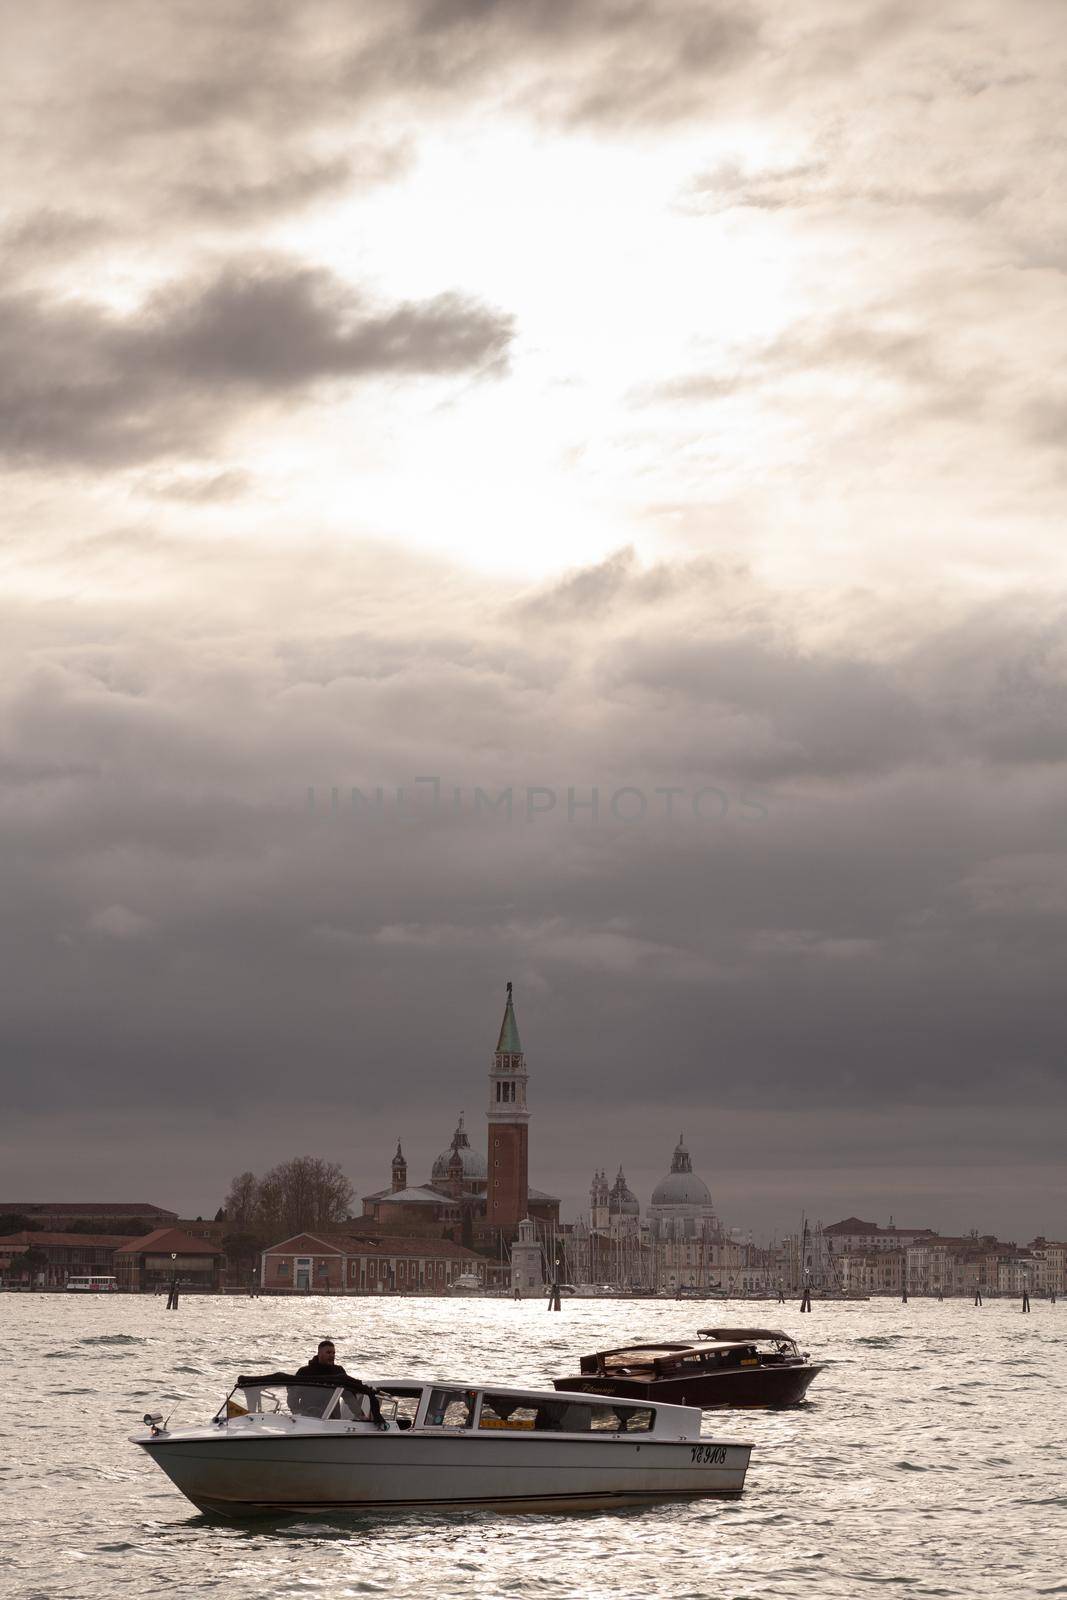 View of the St. Giorgio church on the cloudy sky, Venice